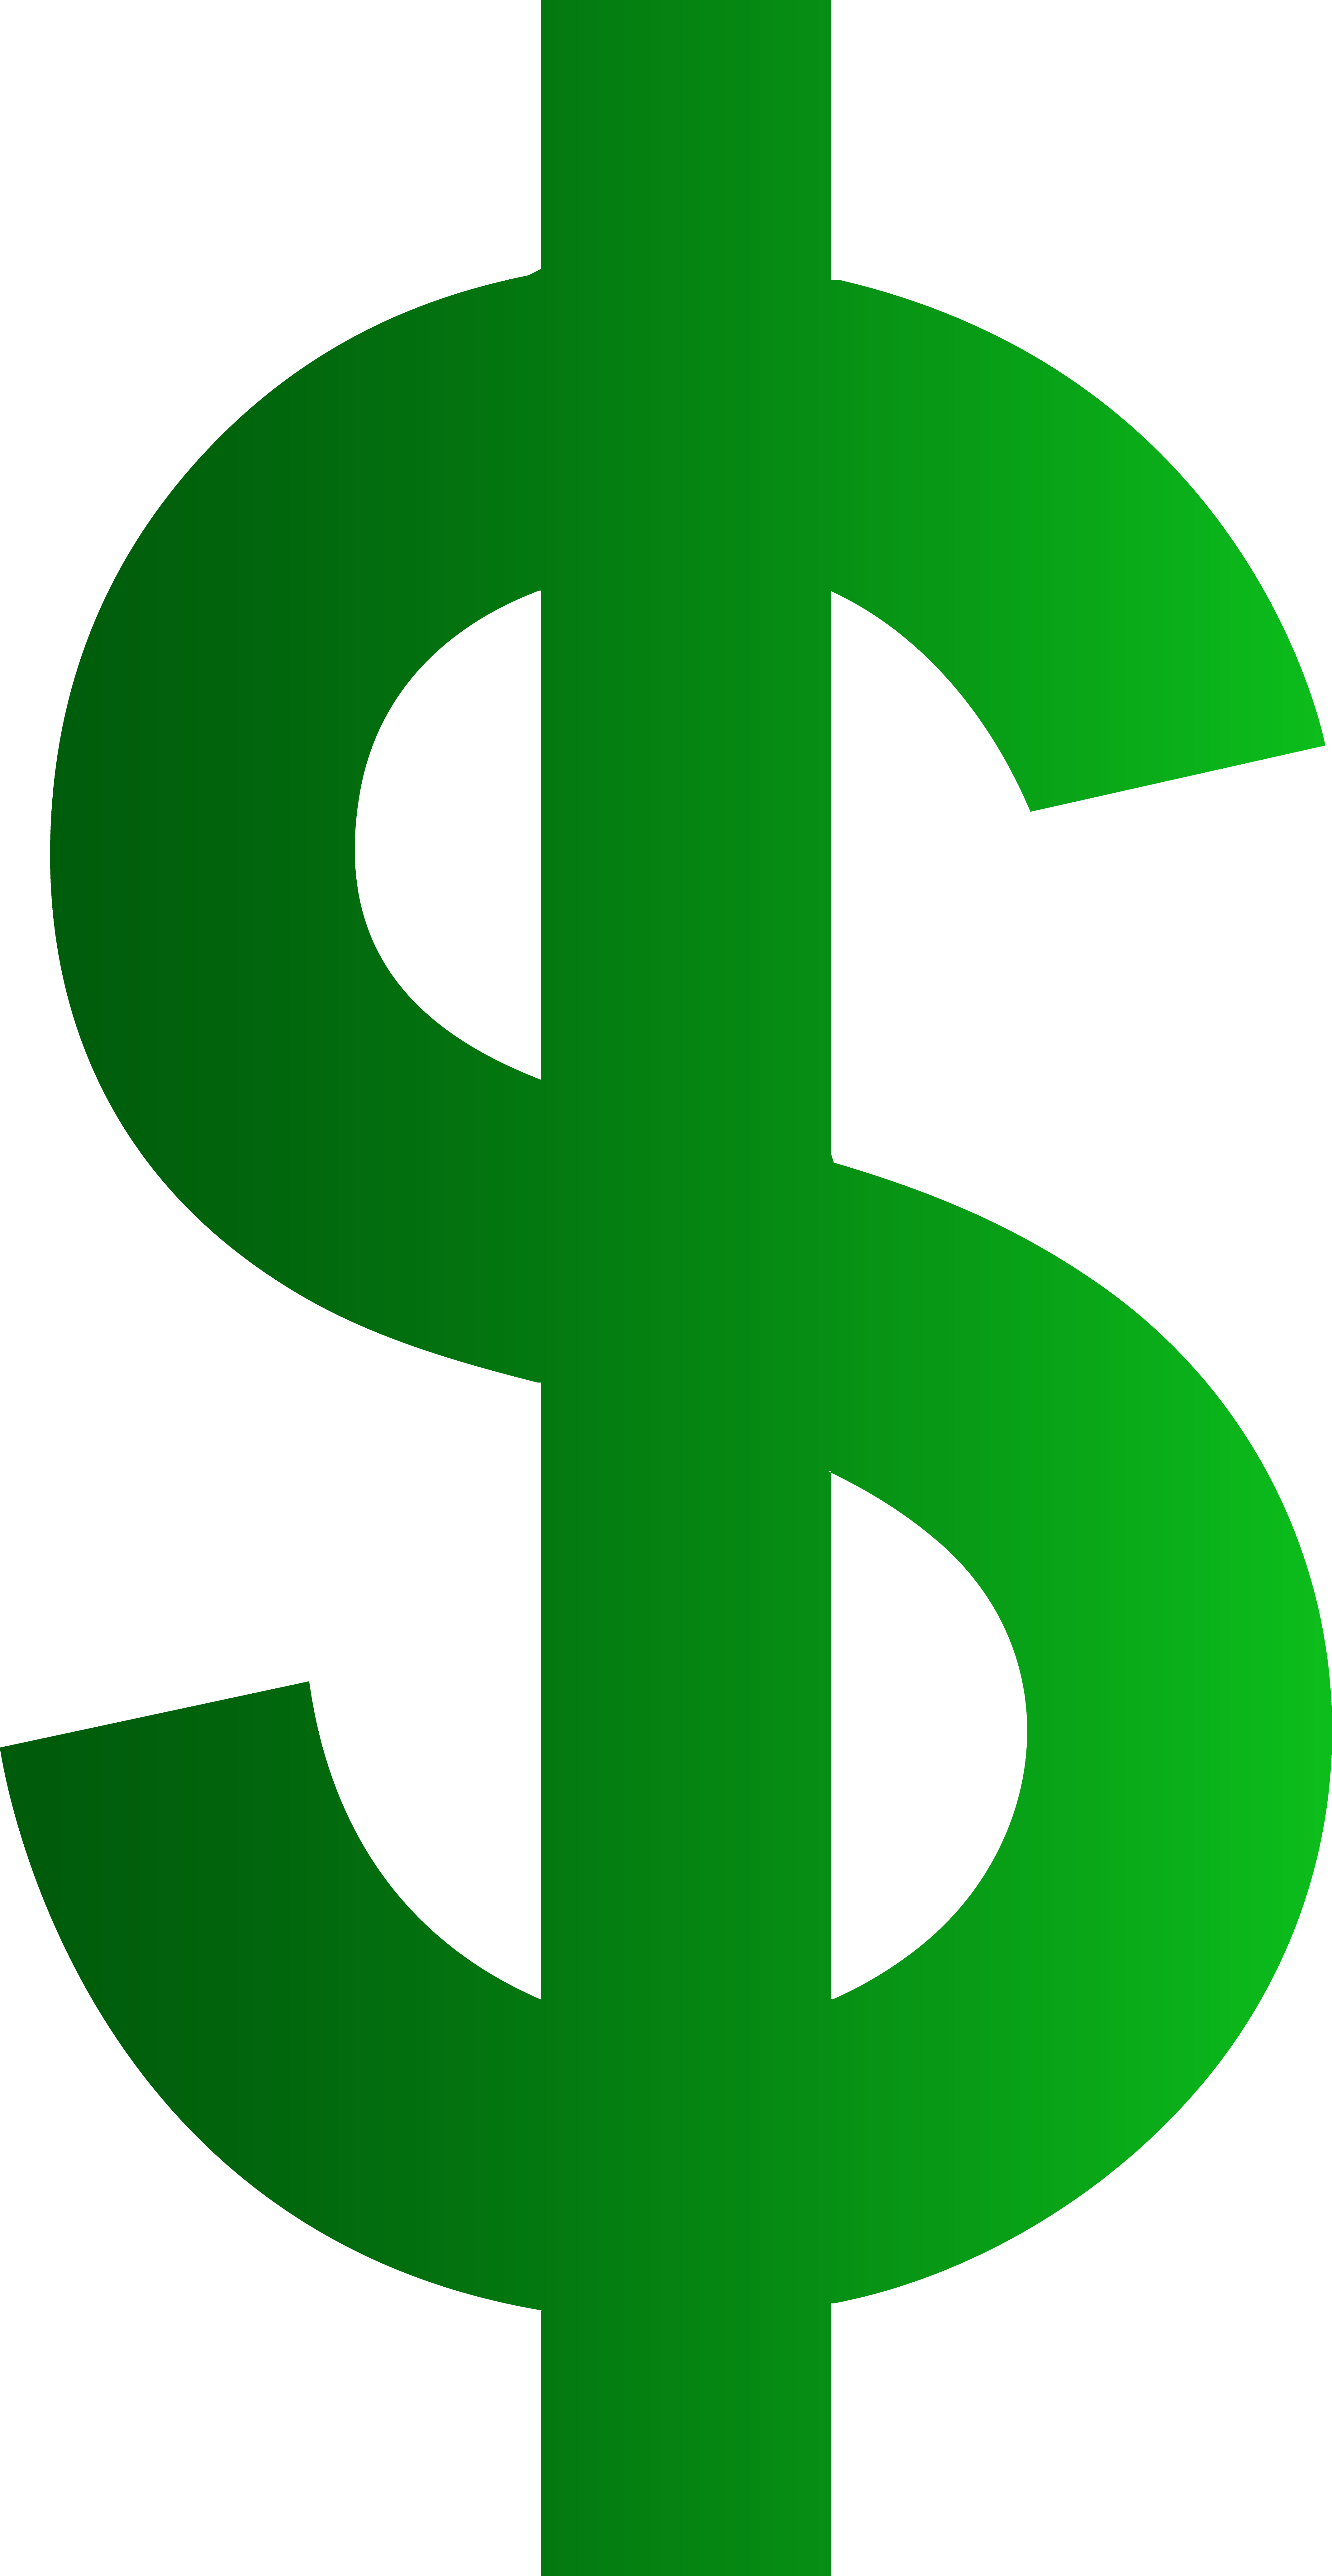 Зеленый символ доллара PNG Image